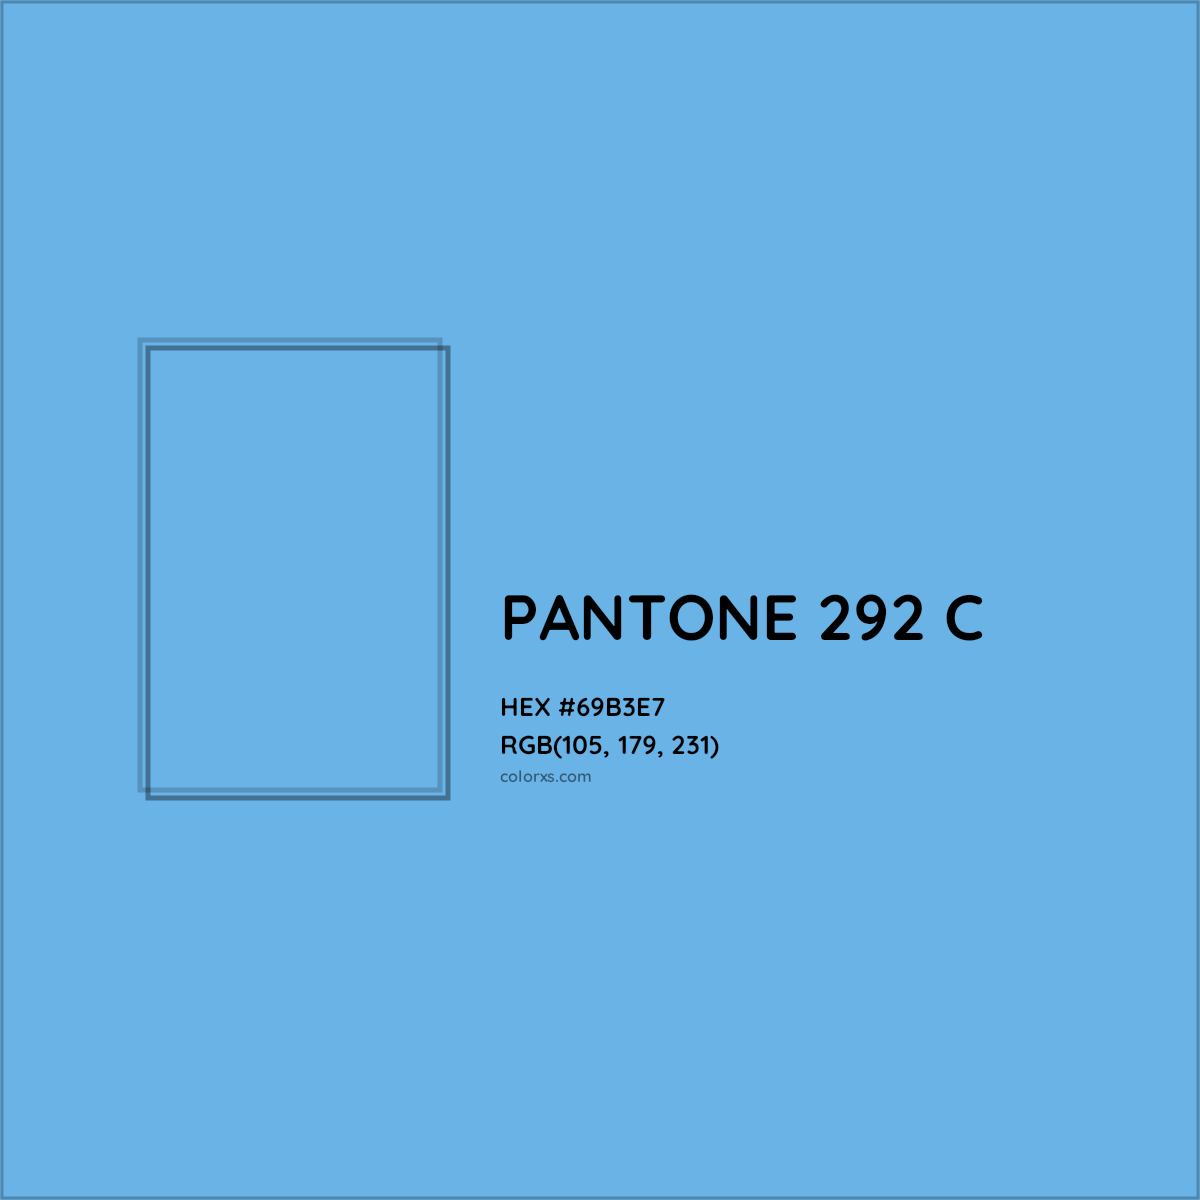 HEX #69B3E7 PANTONE 292 C CMS Pantone PMS - Color Code